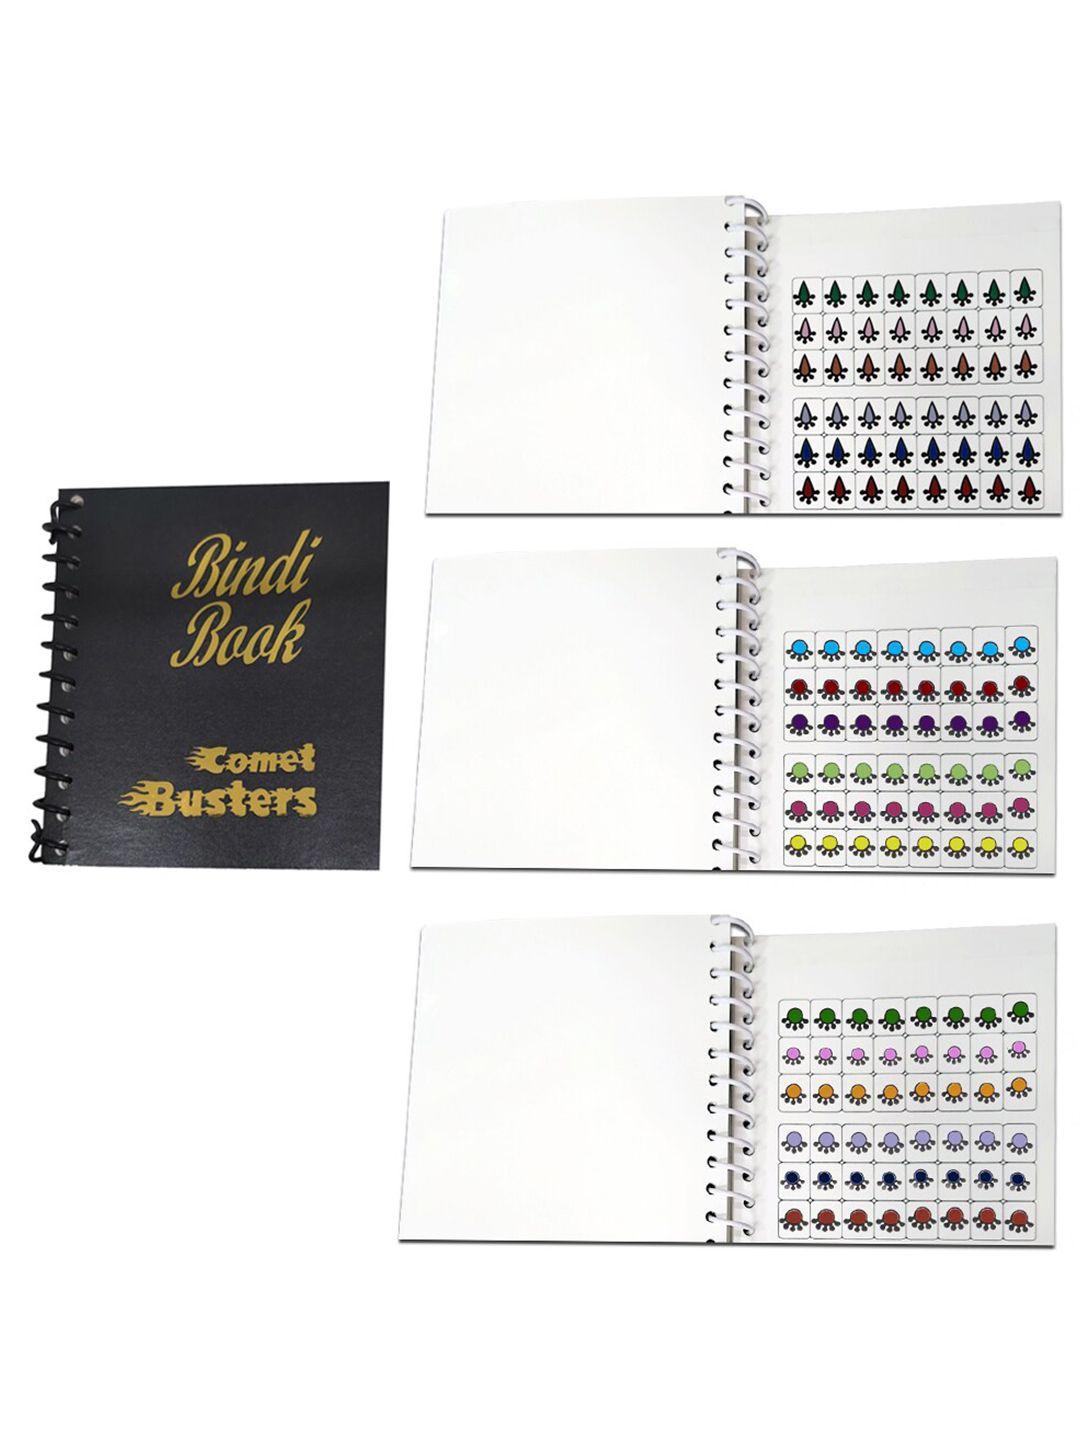 comet busters bindi book with reusable bindis - multicoloured 05